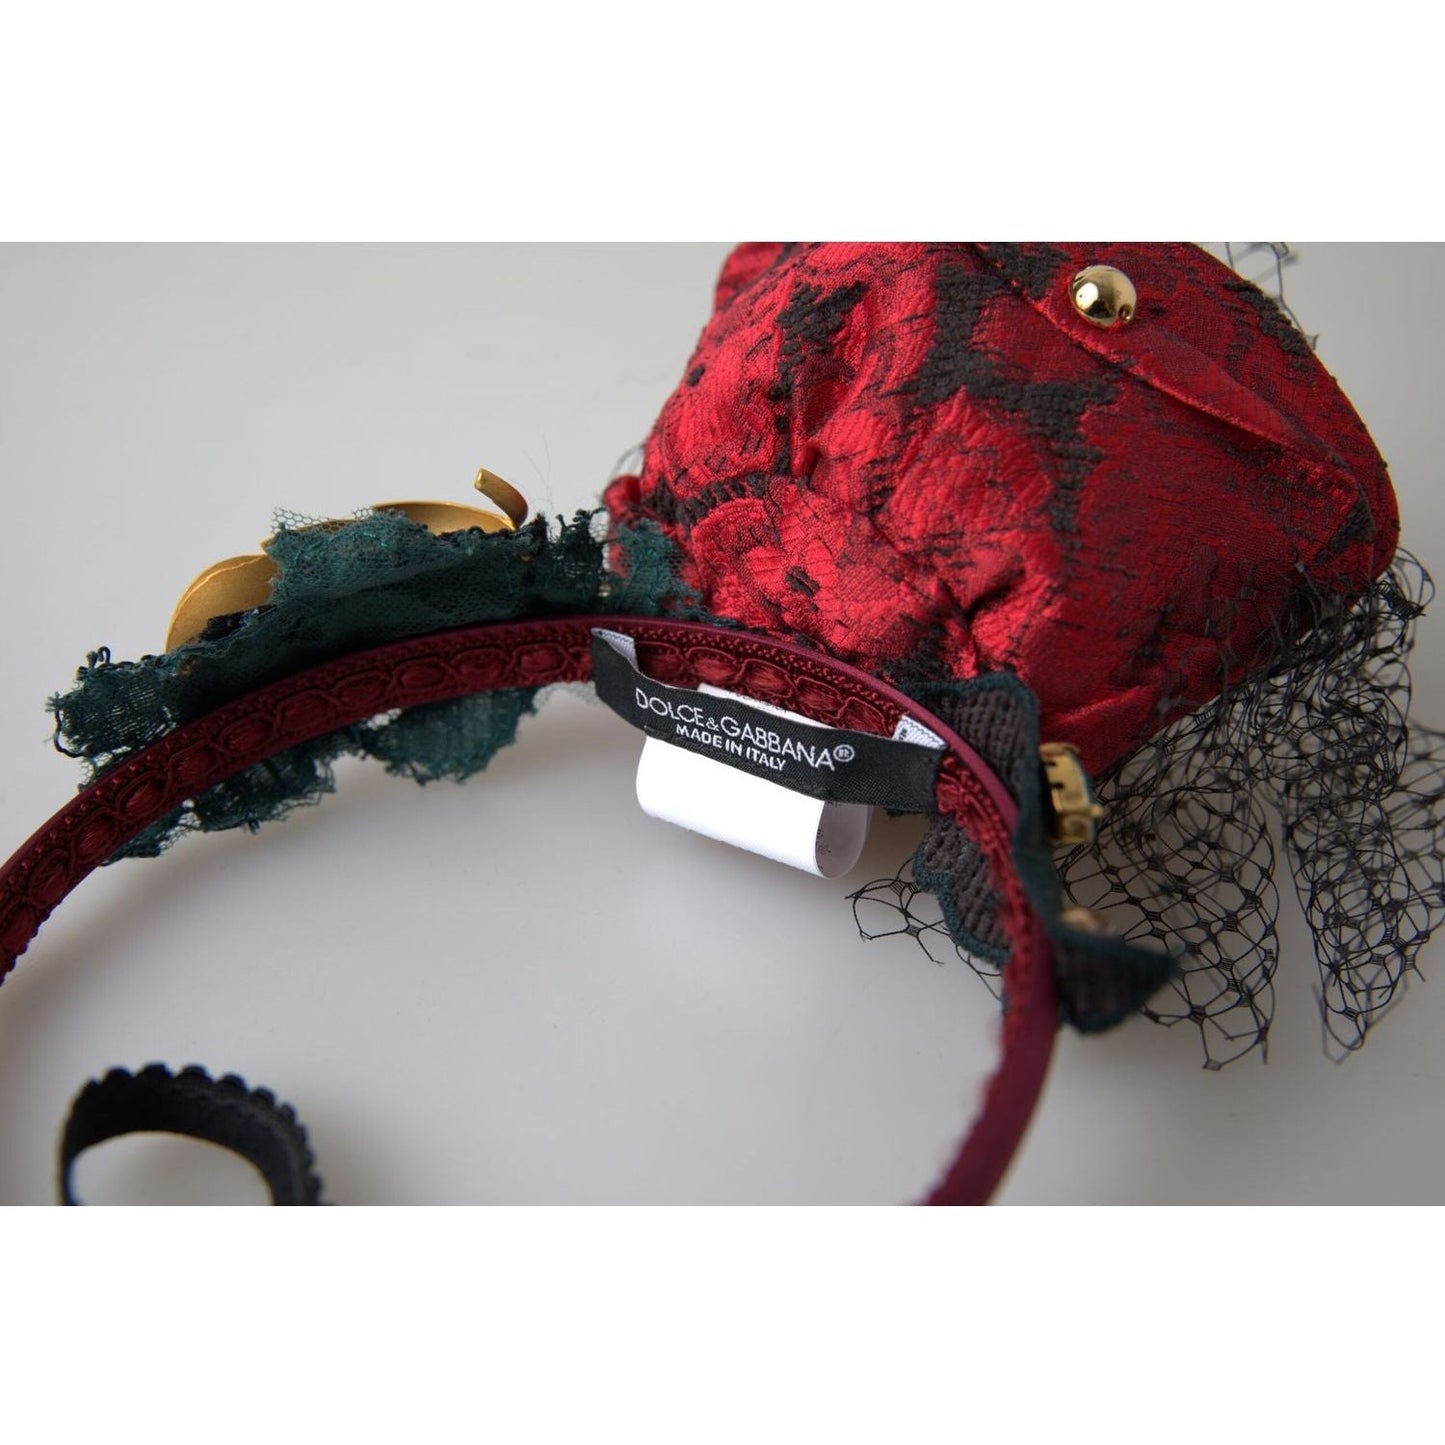 Dolce & Gabbana Enchanted Rose Crystal Headband Diadem red-with-multicolor-rose-silk-crystal-netted-logo-diadem-headband